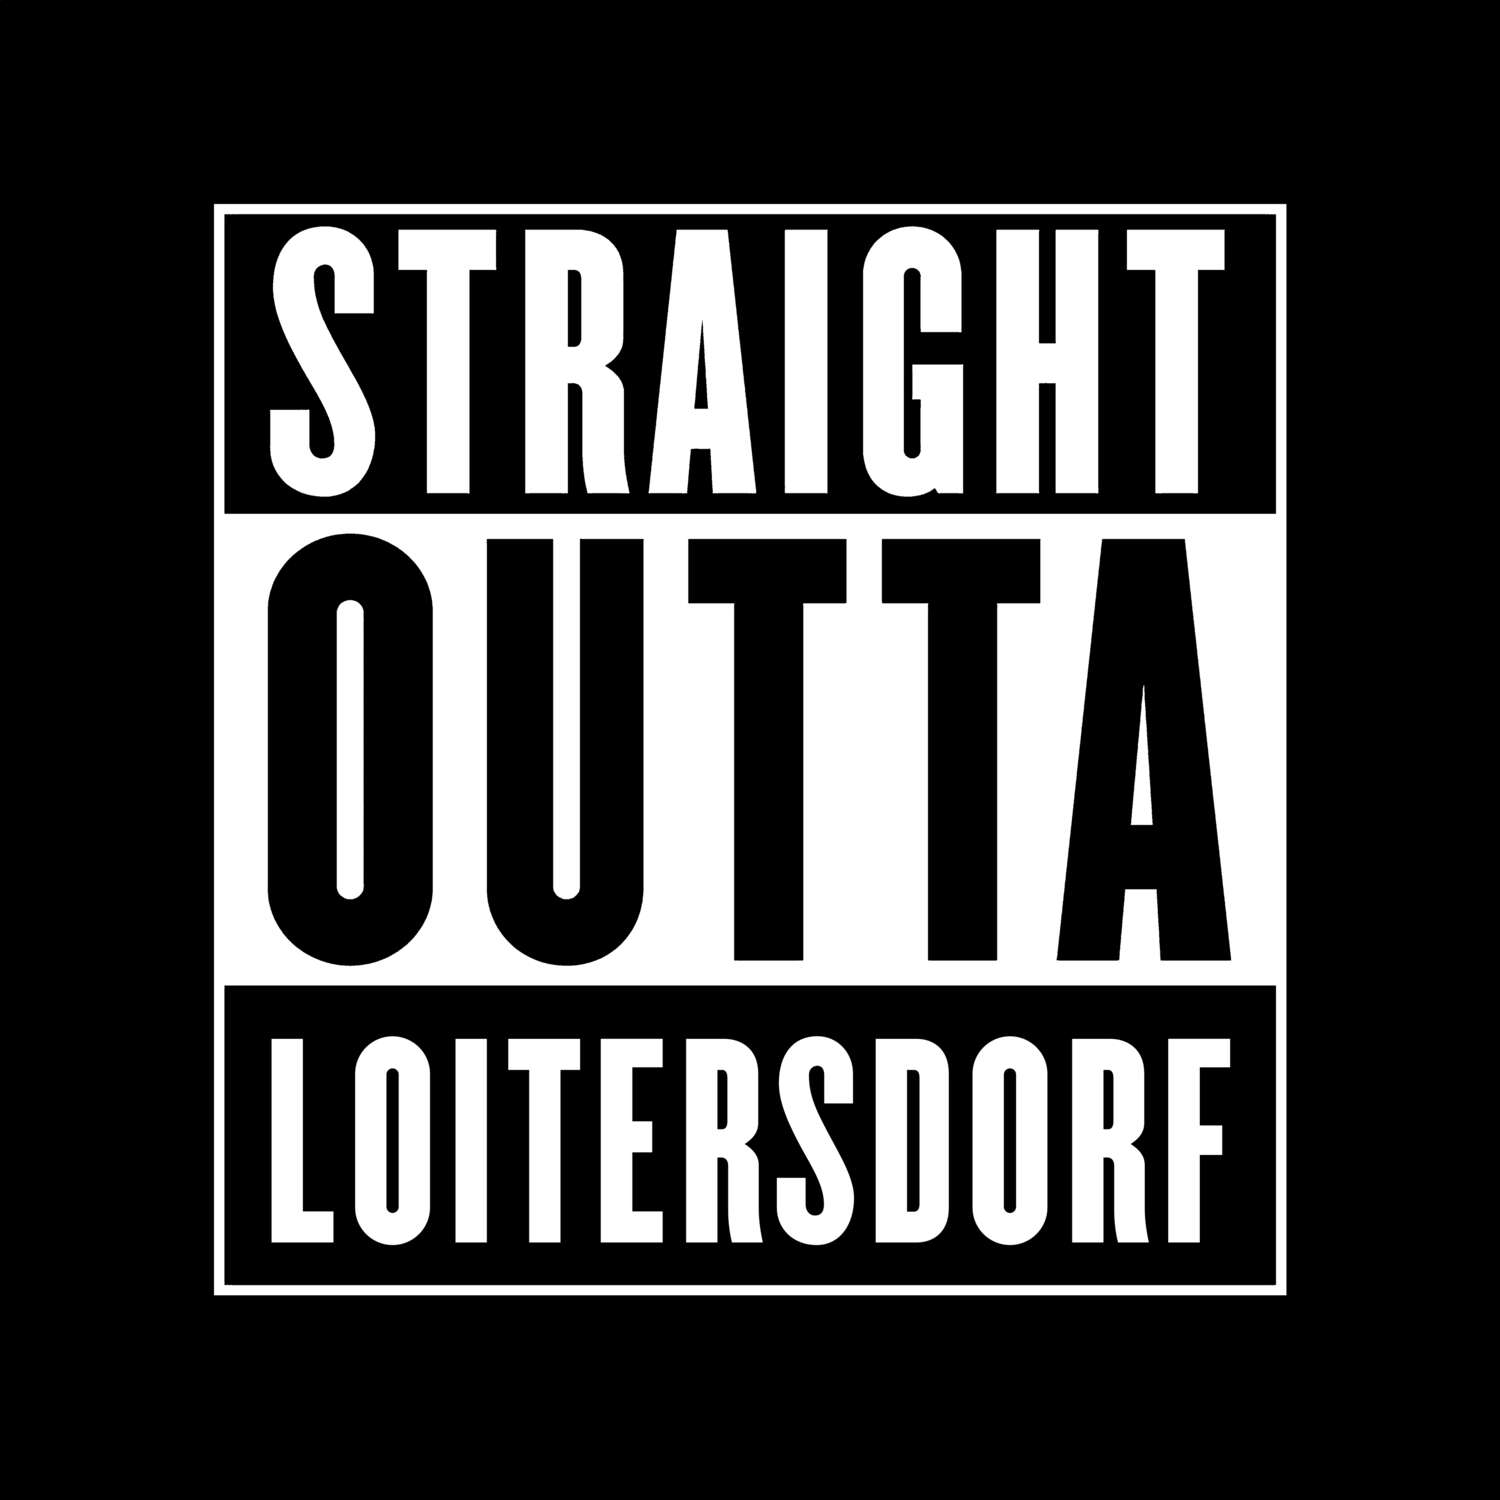 Loitersdorf T-Shirt »Straight Outta«